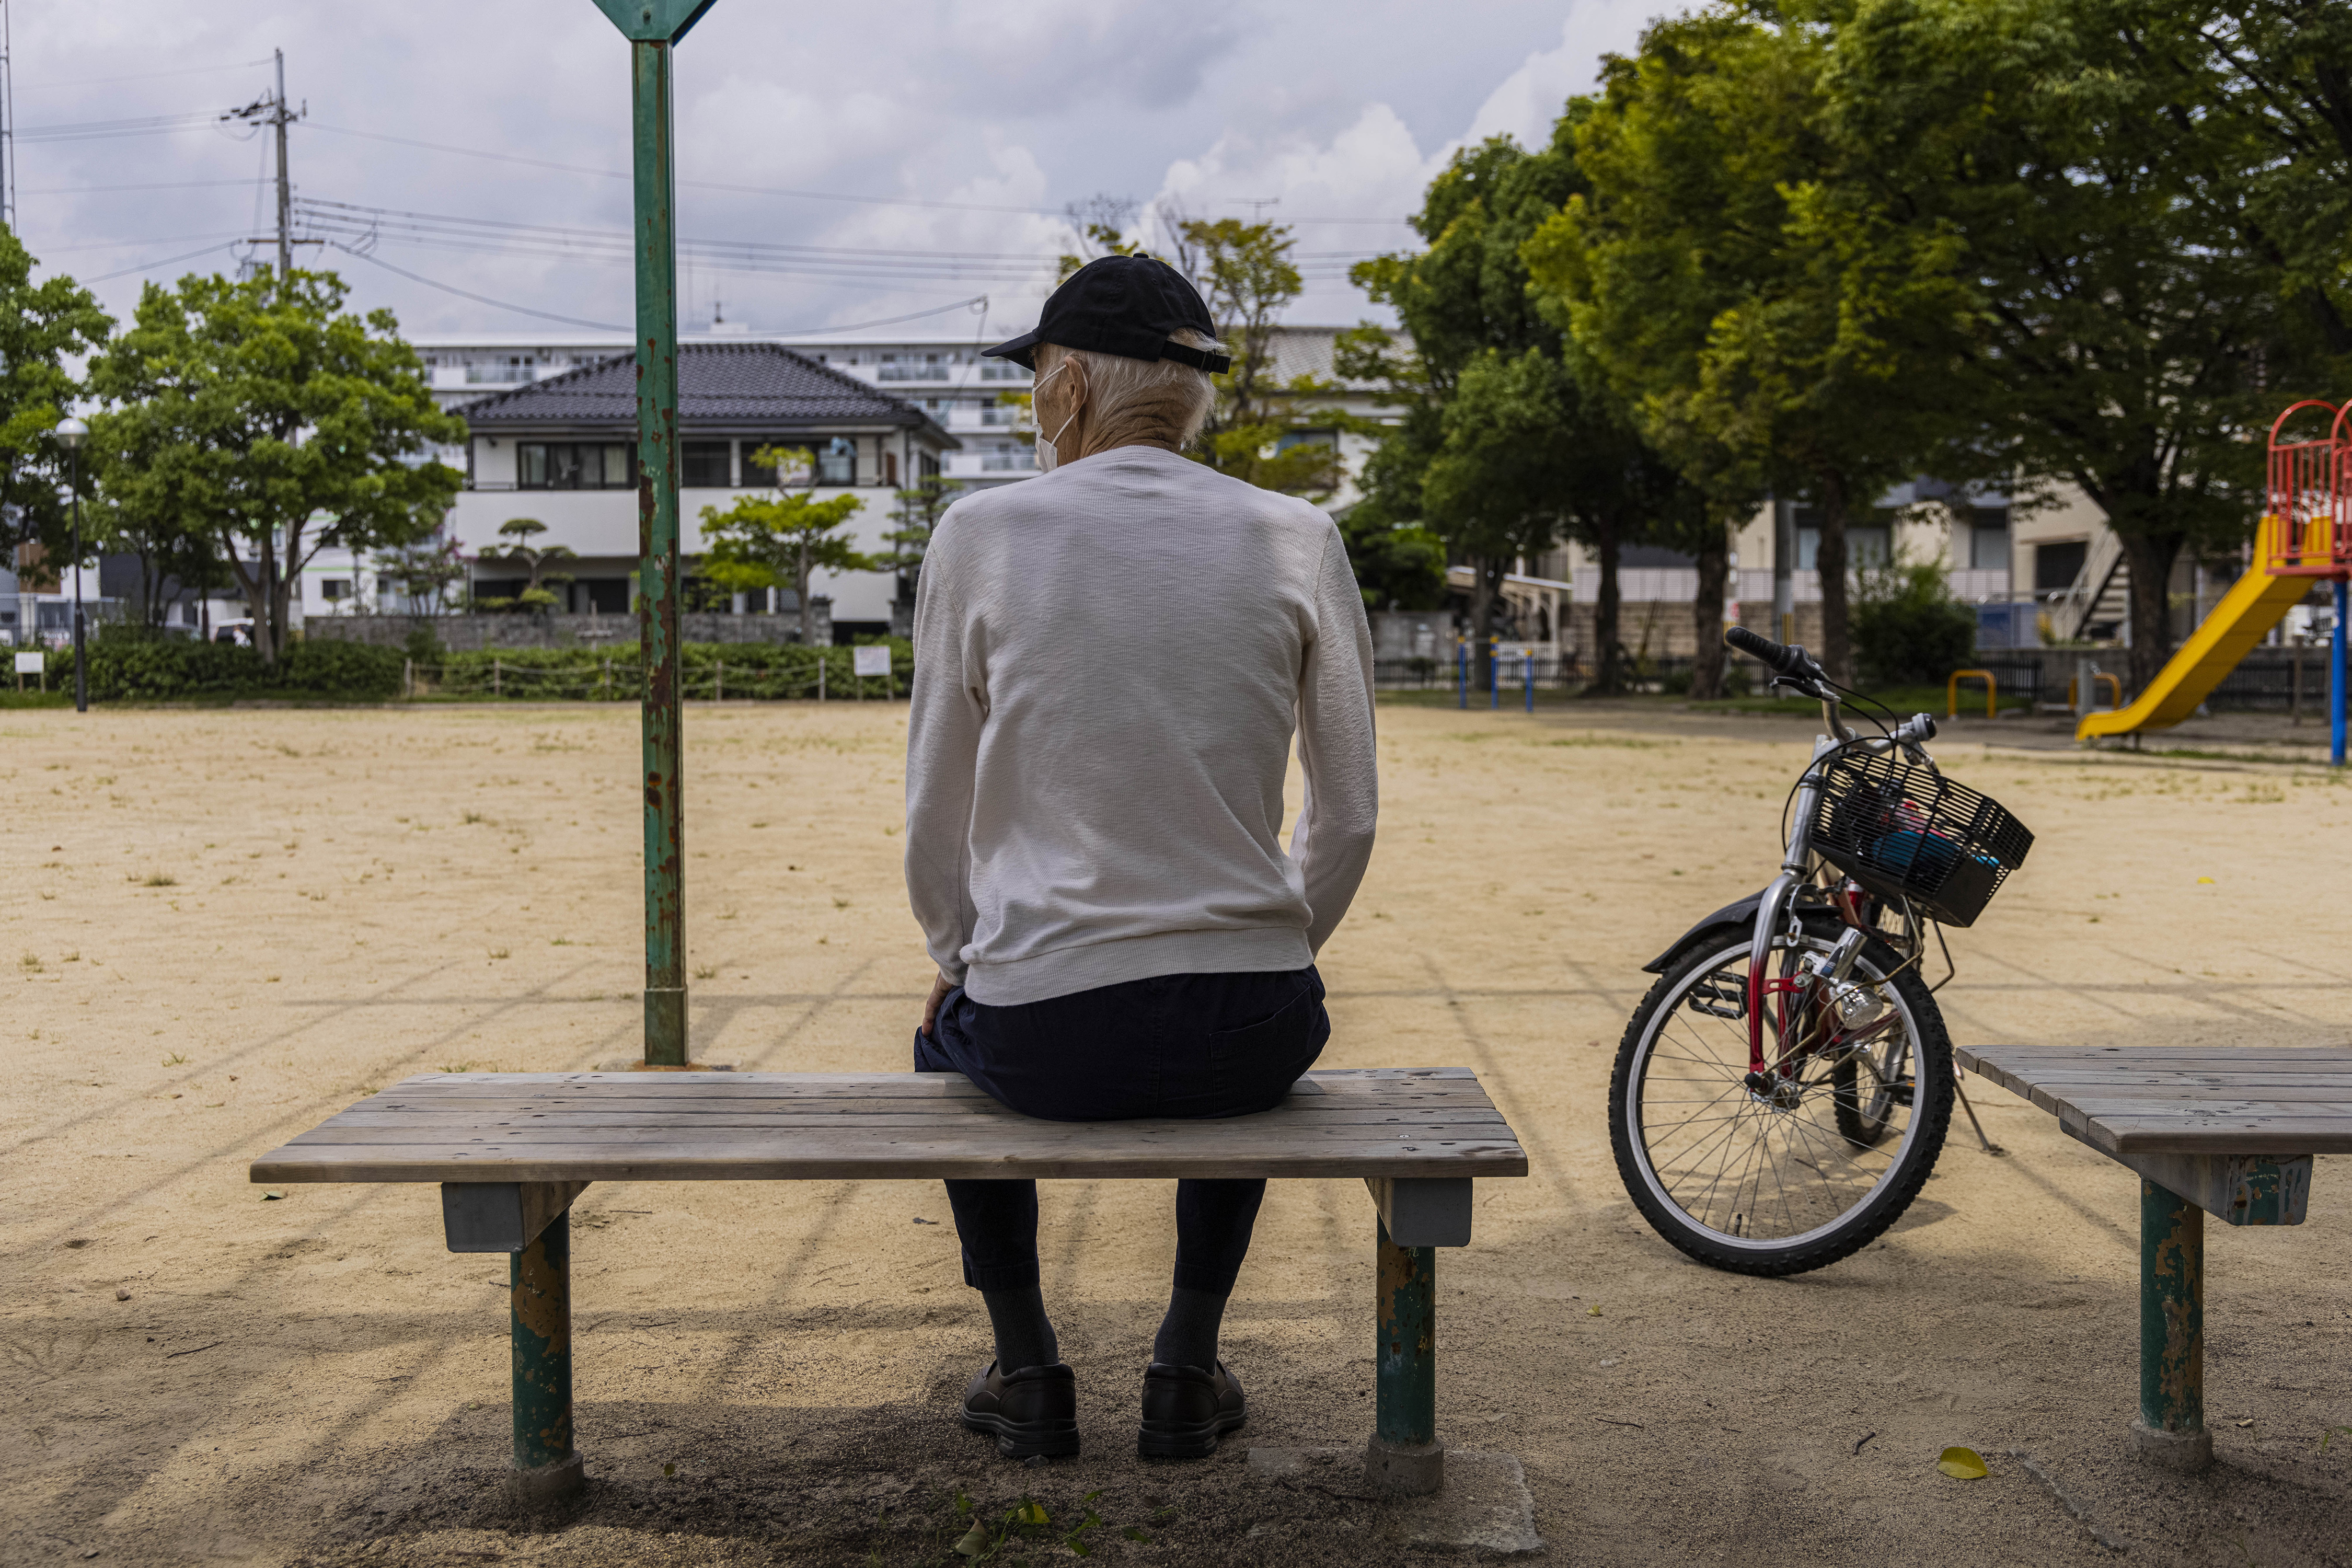 Itami comenzó a inscribir a personas con demencia en su programa de vigilancia electrónica en 2015. (Hiroko Masuike/The New York Times)